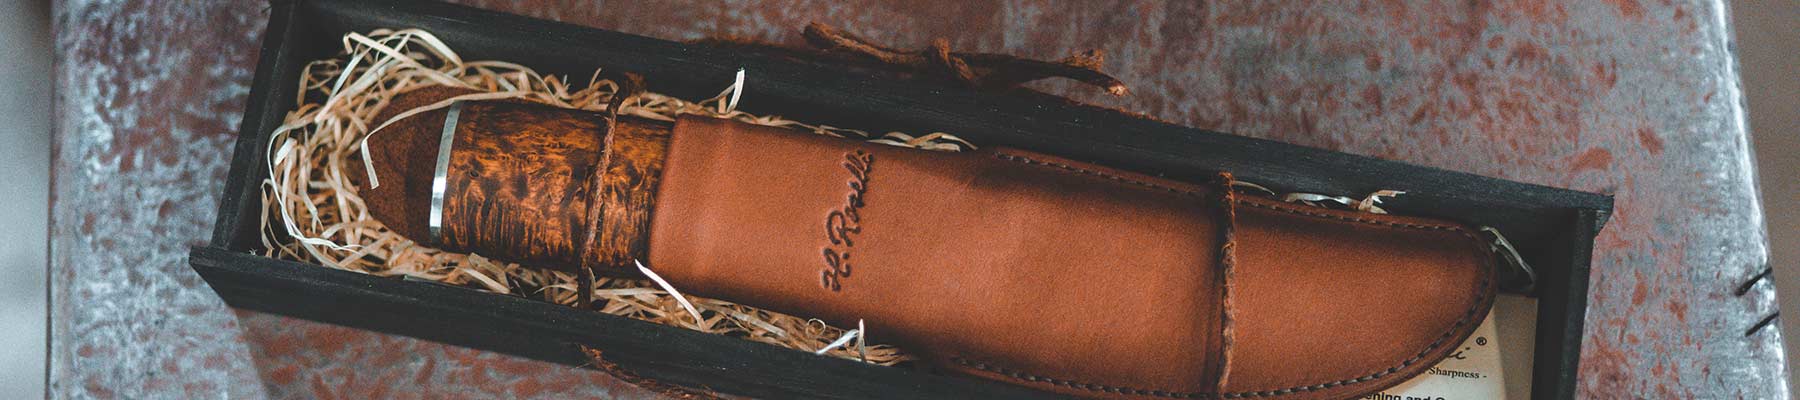 Roselli handmade knife in leather sheath laying in black gift box 